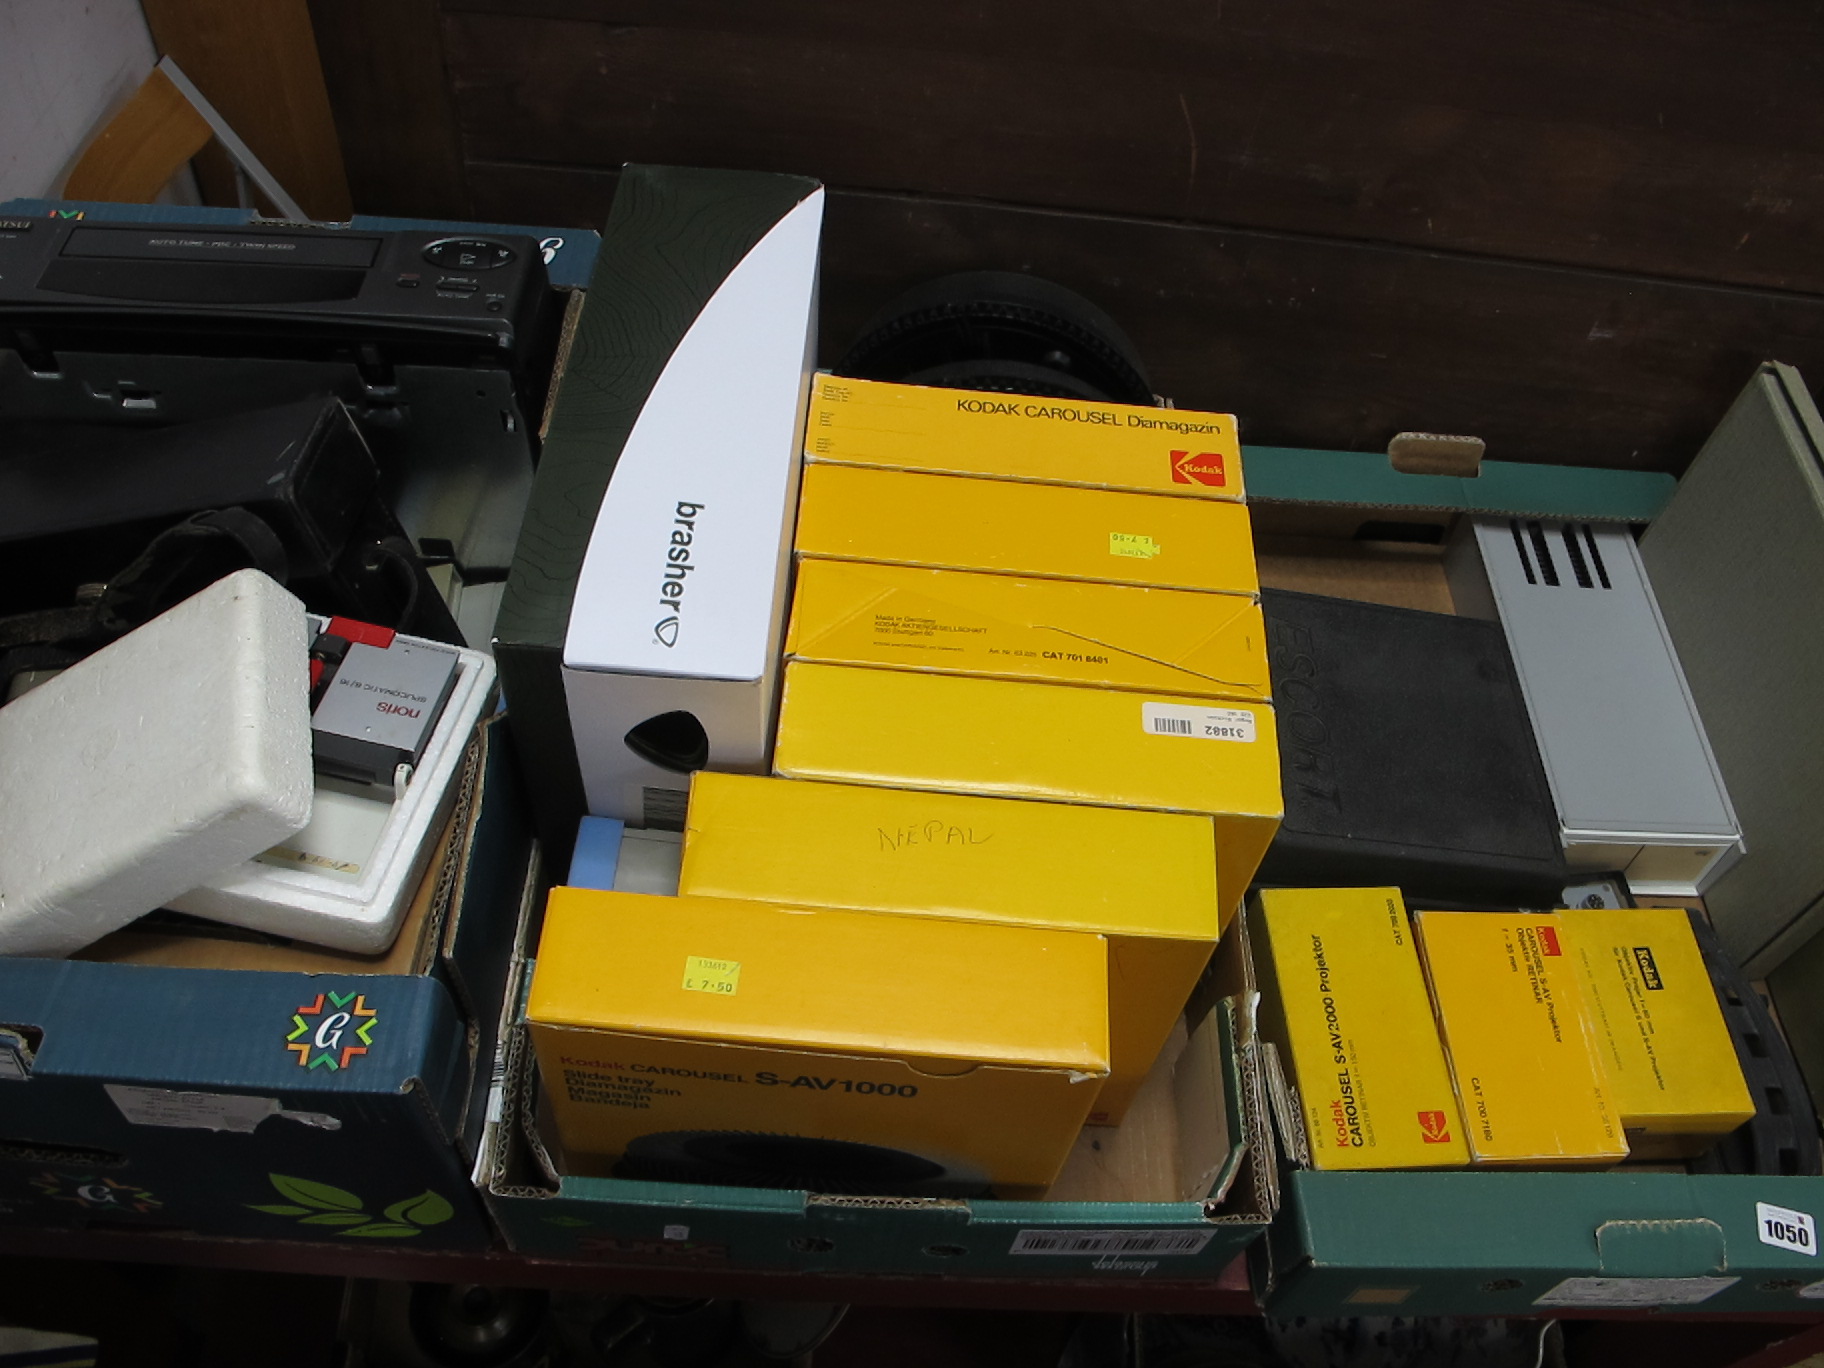 Kodak Carousel S-AV1000, Escort Radar warning receiver, Matsui VHS recorder, Bell & Howell